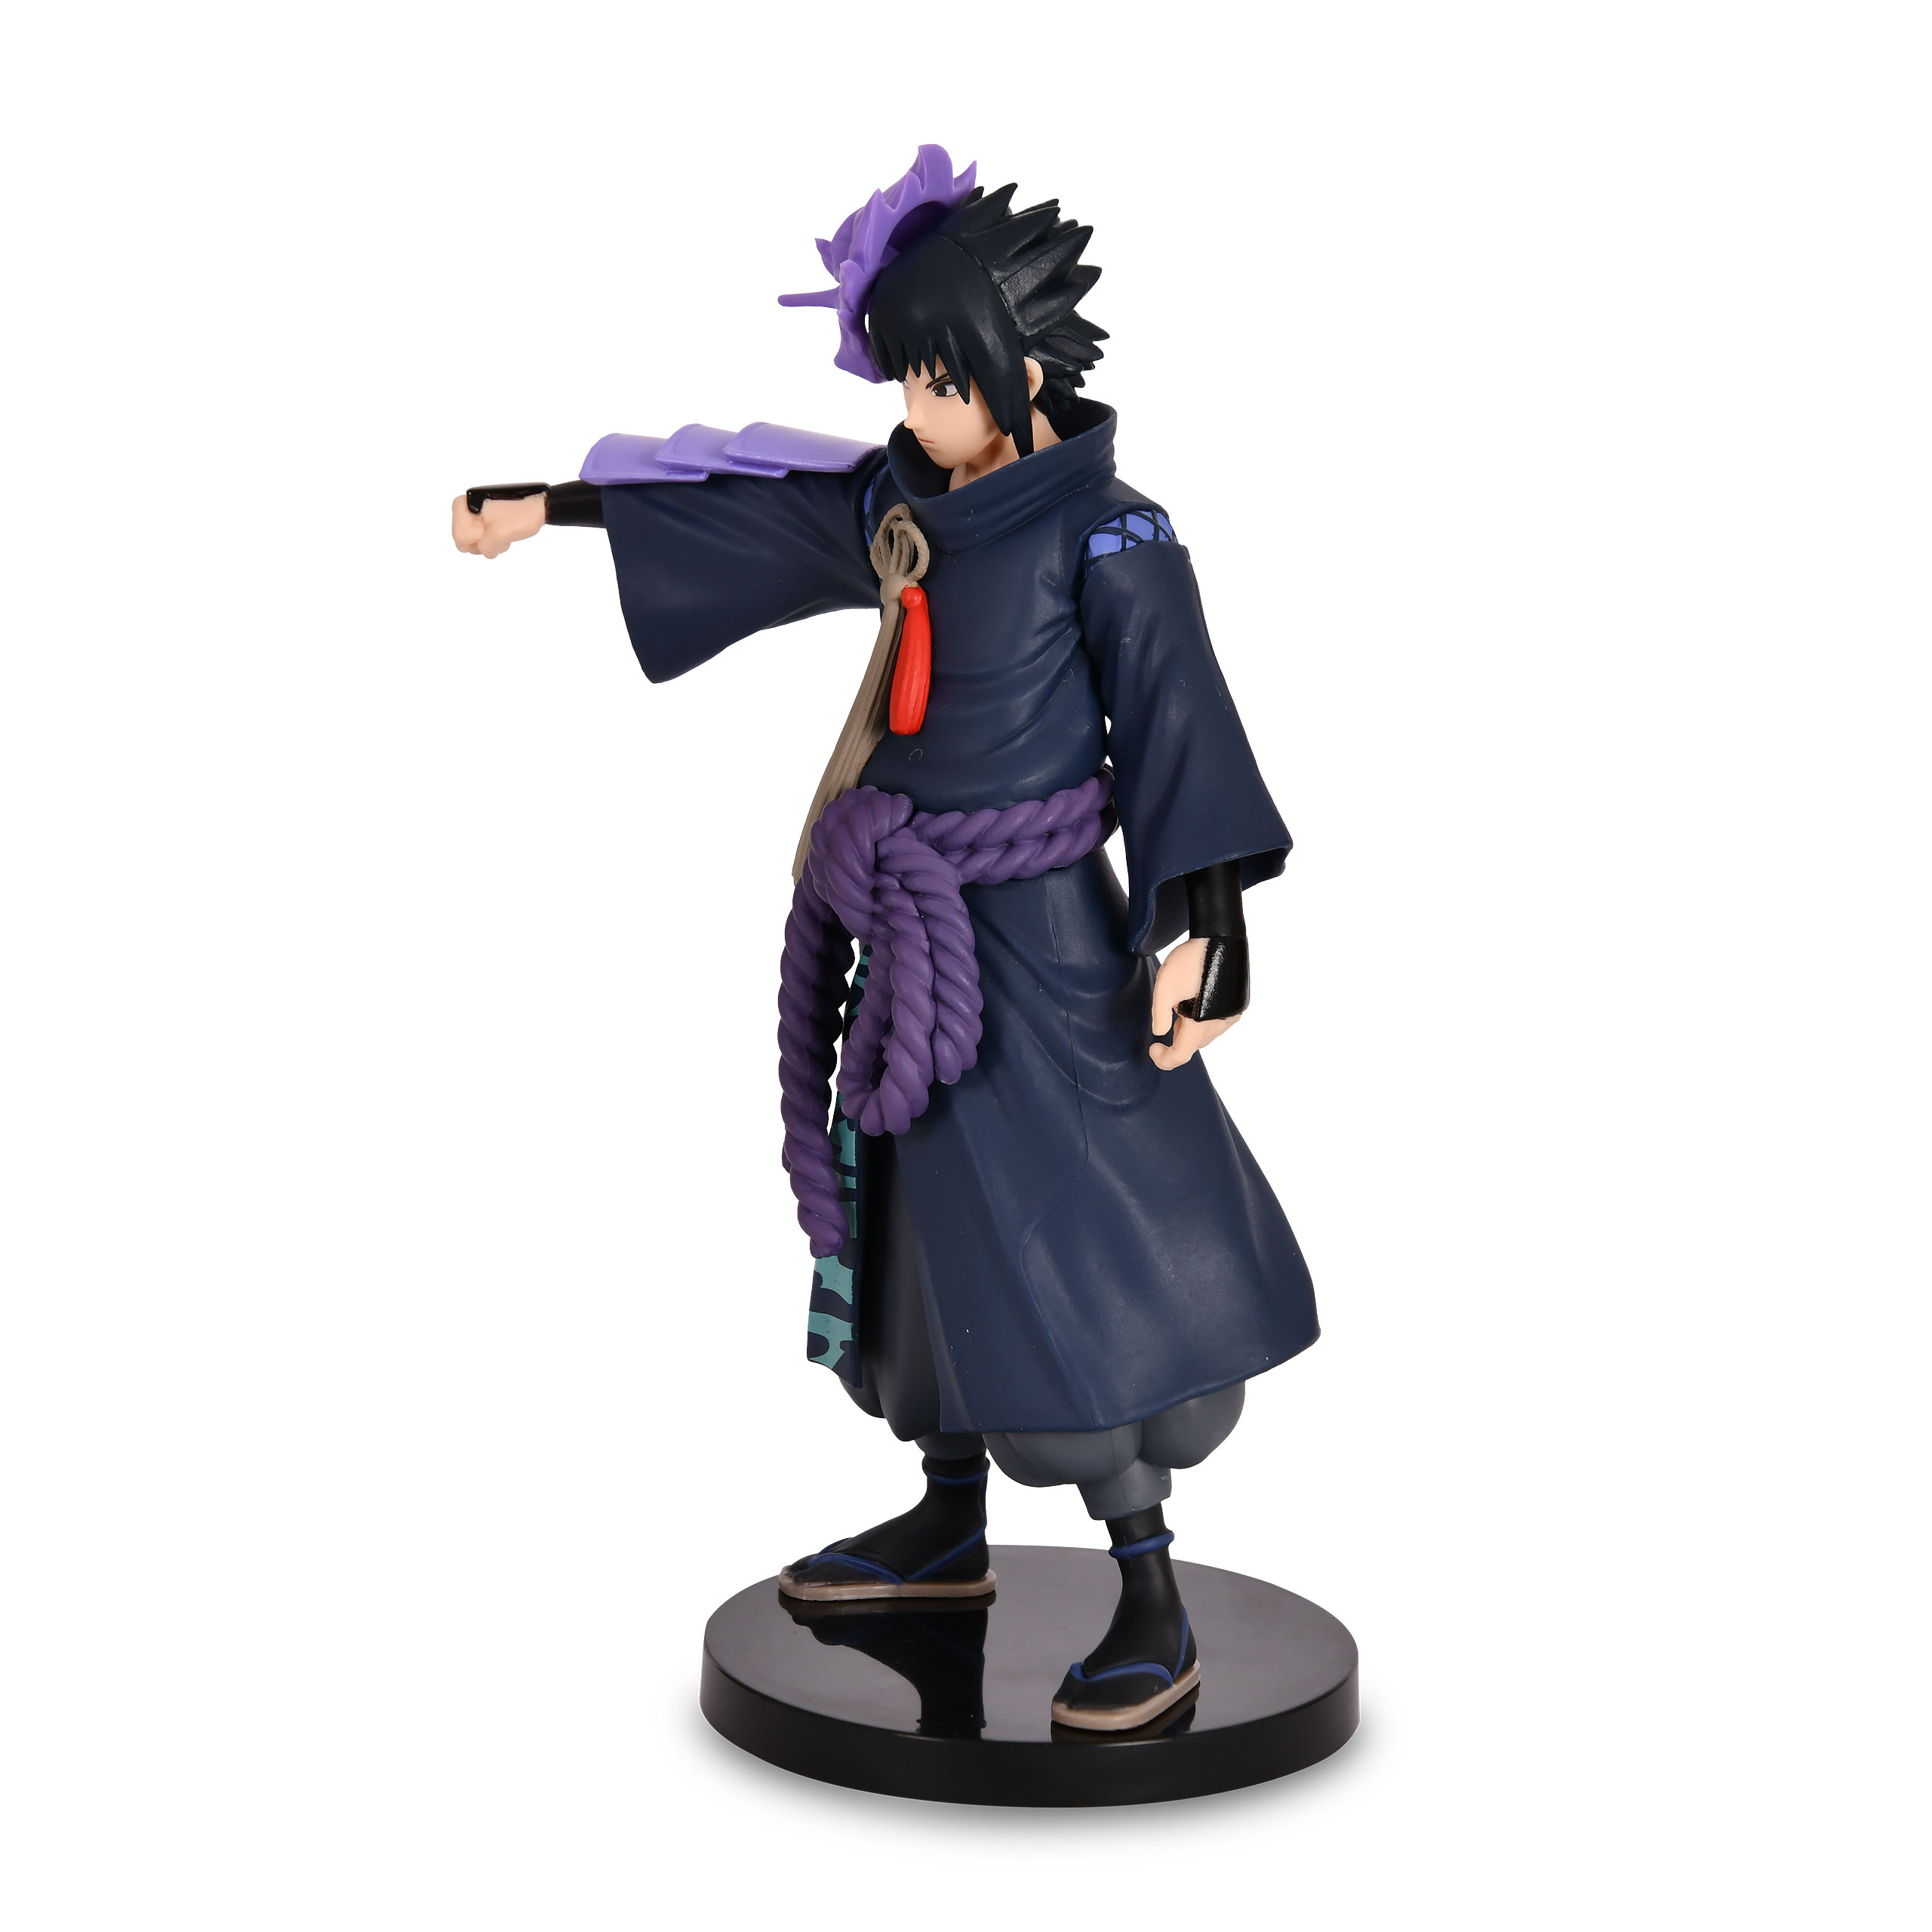 Naruto Shippuden - Uchiha Sasuke 20th Anniversary Figure